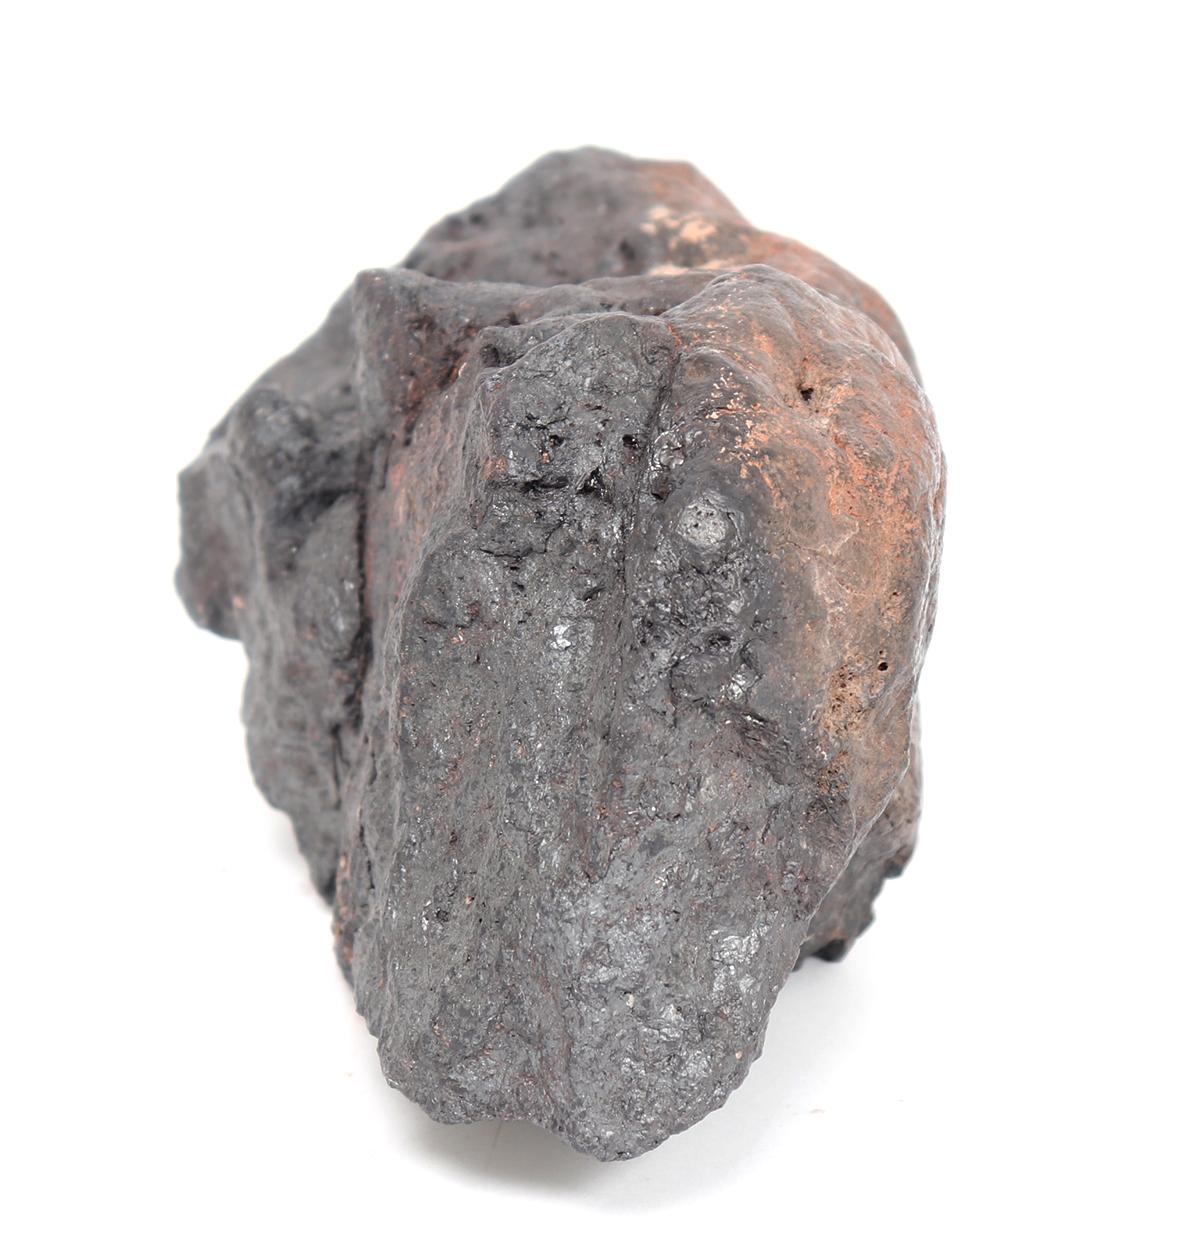 10 pound 14.4 Ounce Iron-Nickel Meteorite